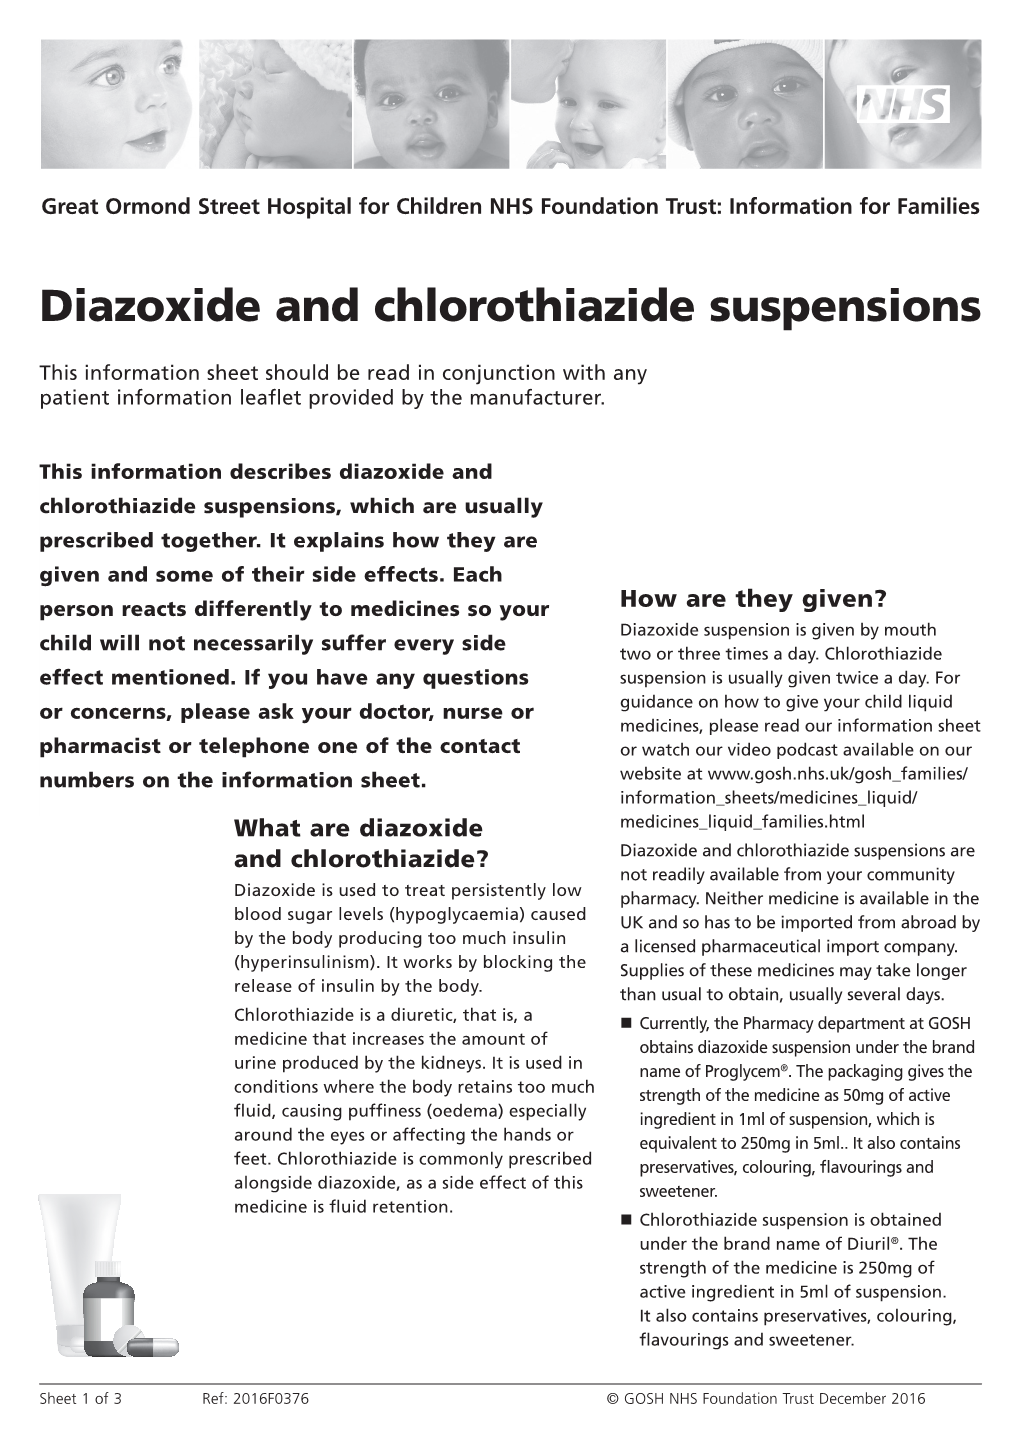 Diazoxide and Chlorothiazide Suspensions